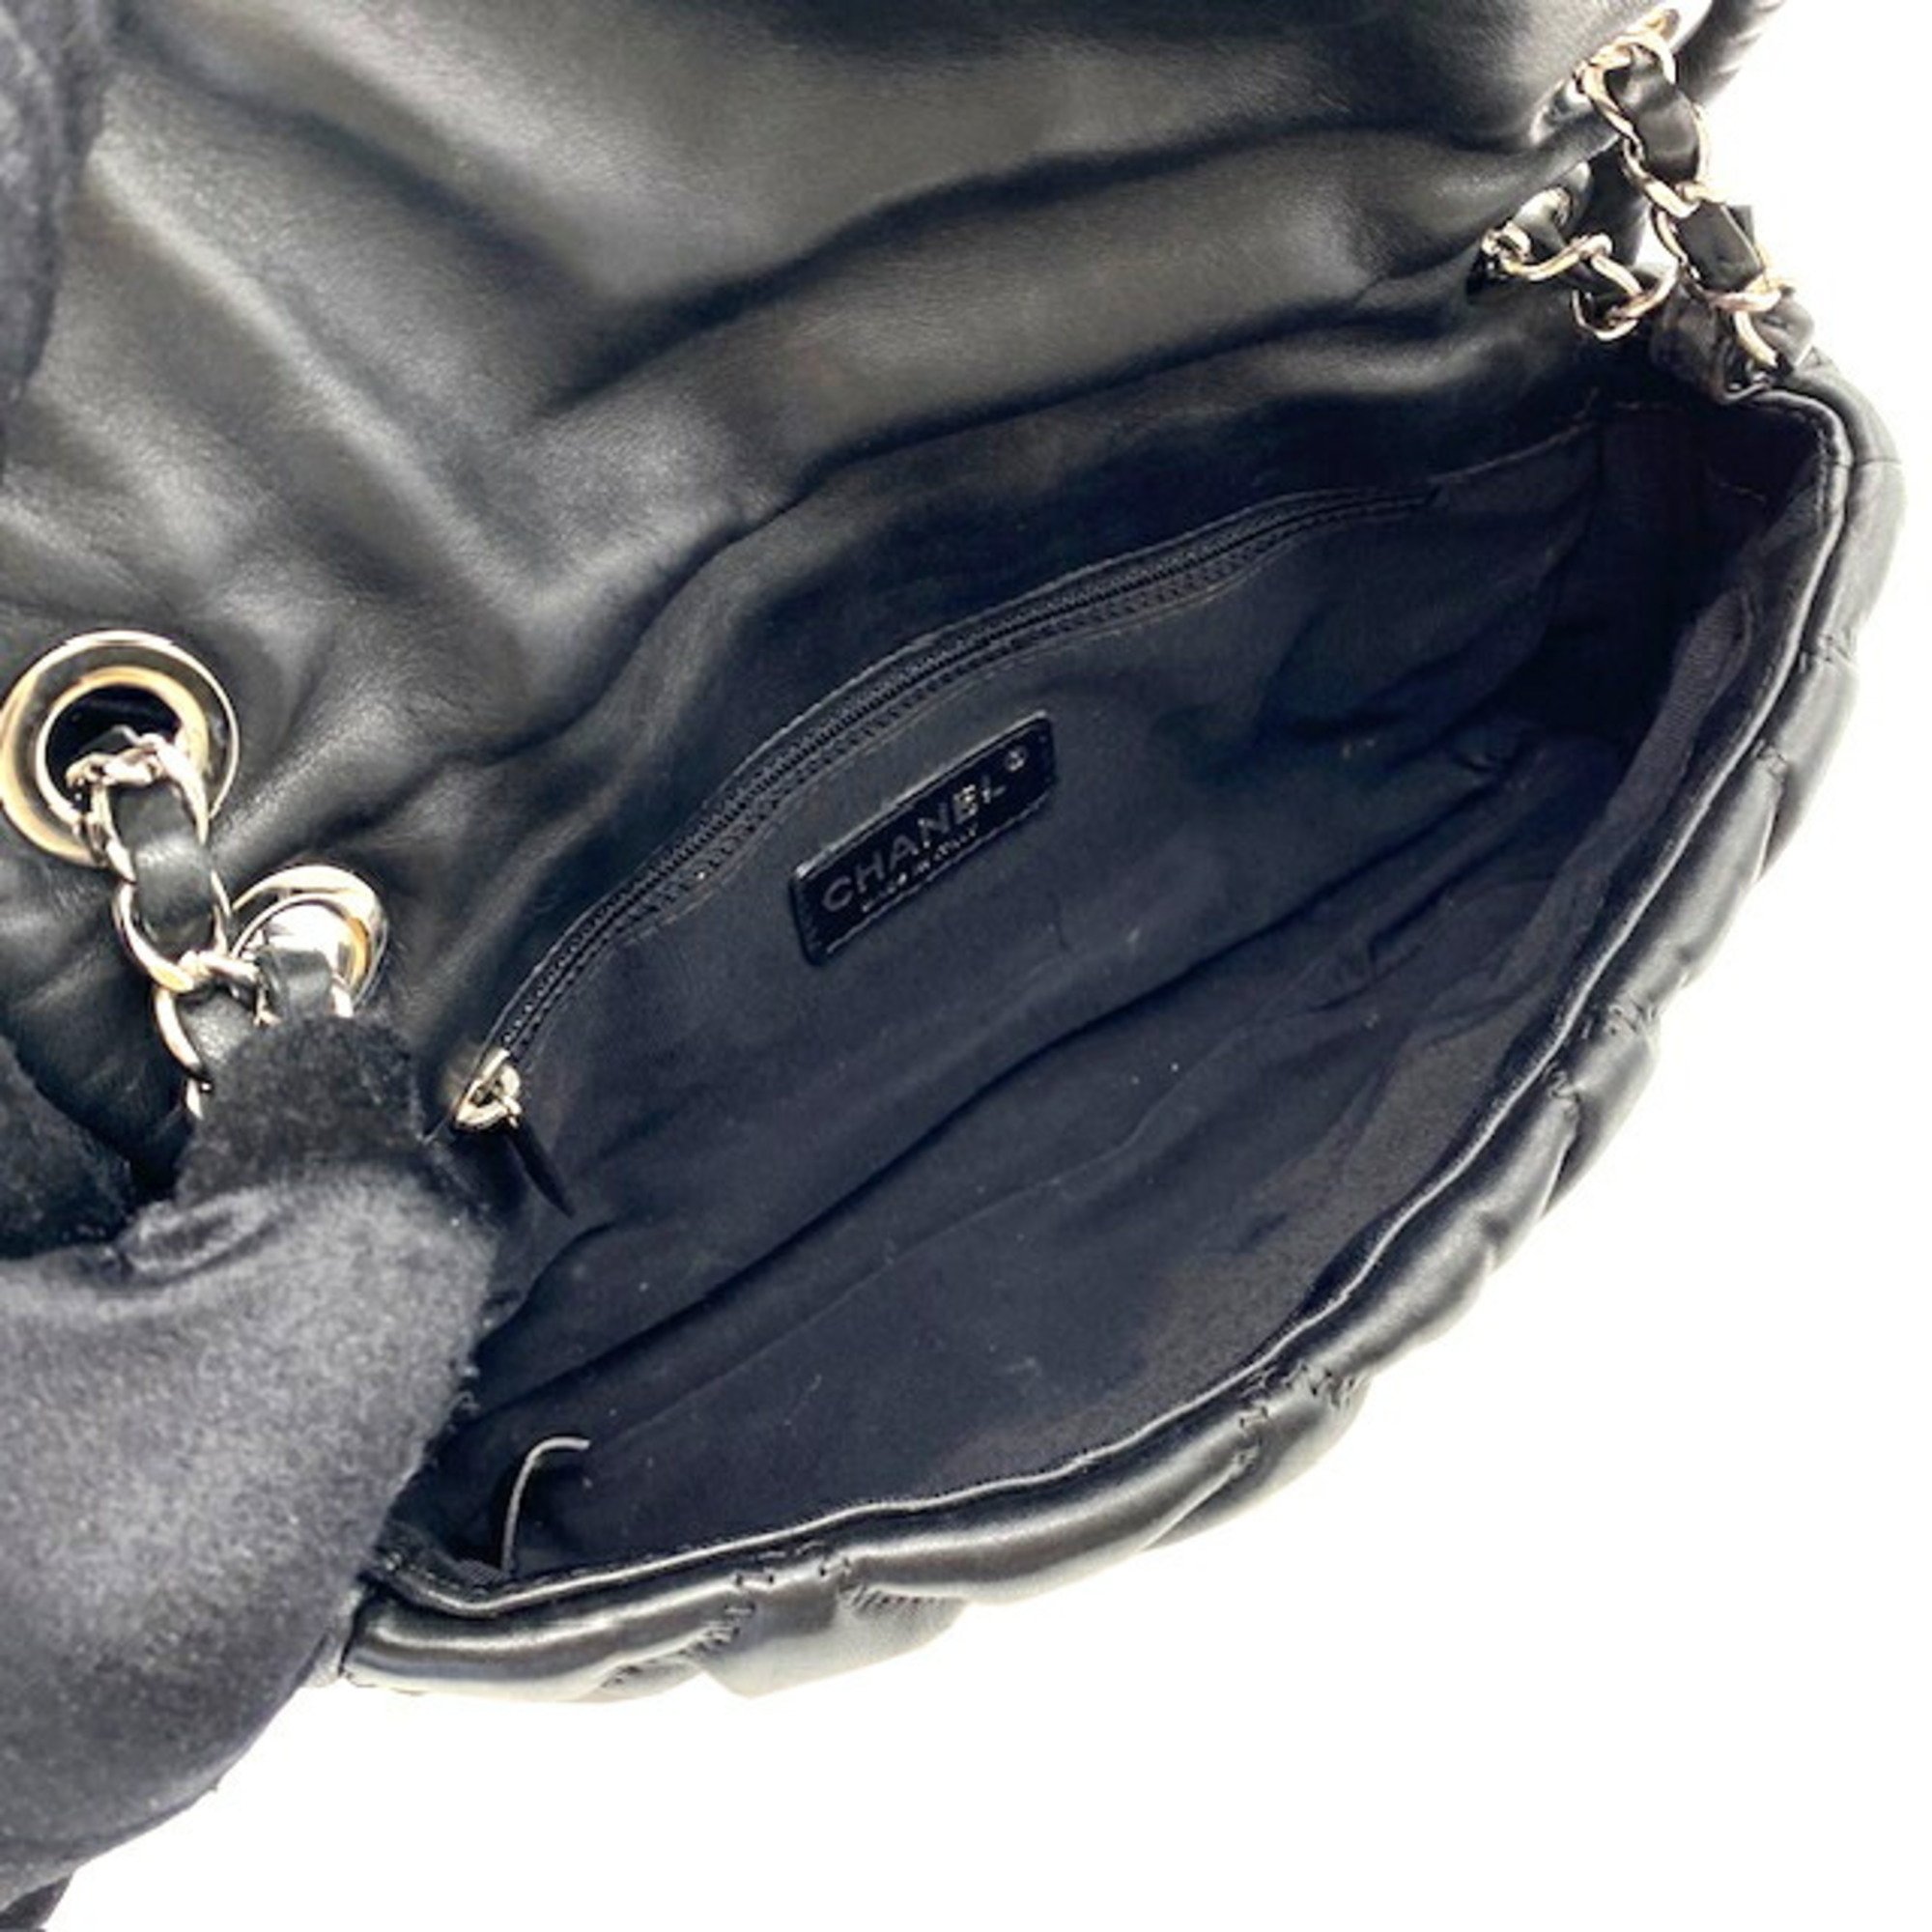 CHANEL Bubble Quilt Chain Shoulder Bag in Lambskin, Black